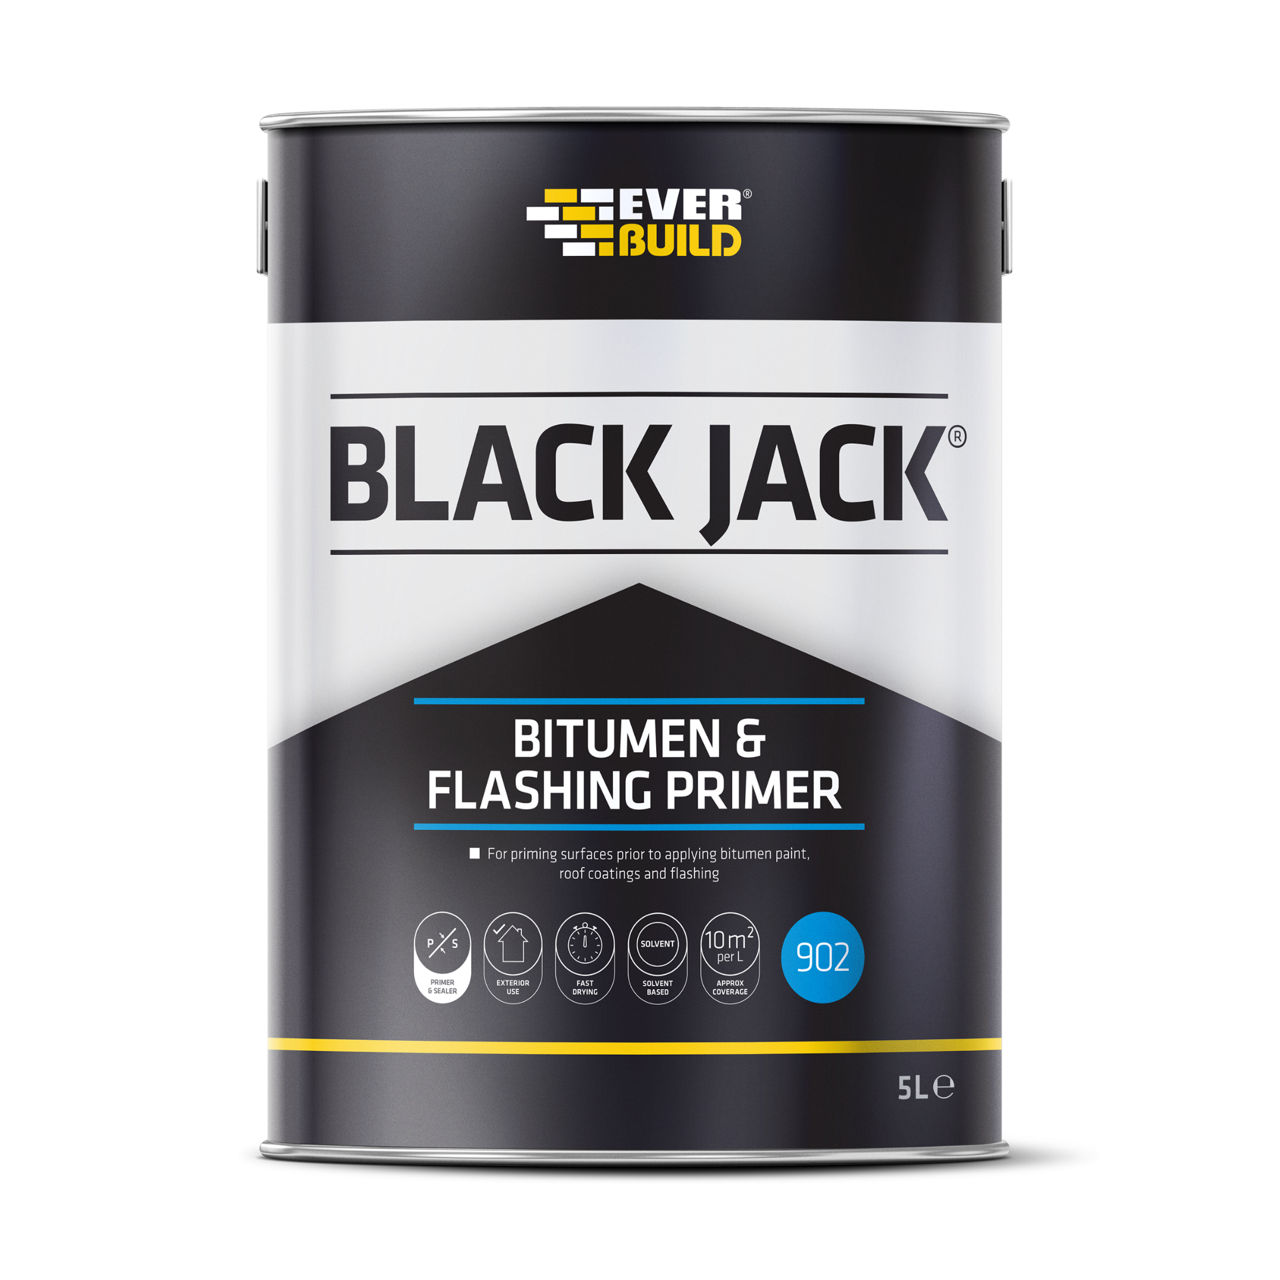 https://sika.scene7.com/is/image/sikacs/ie-03-en-IE-Black-Jack-Bitumen-Flashing-Primer-1x1-00537055